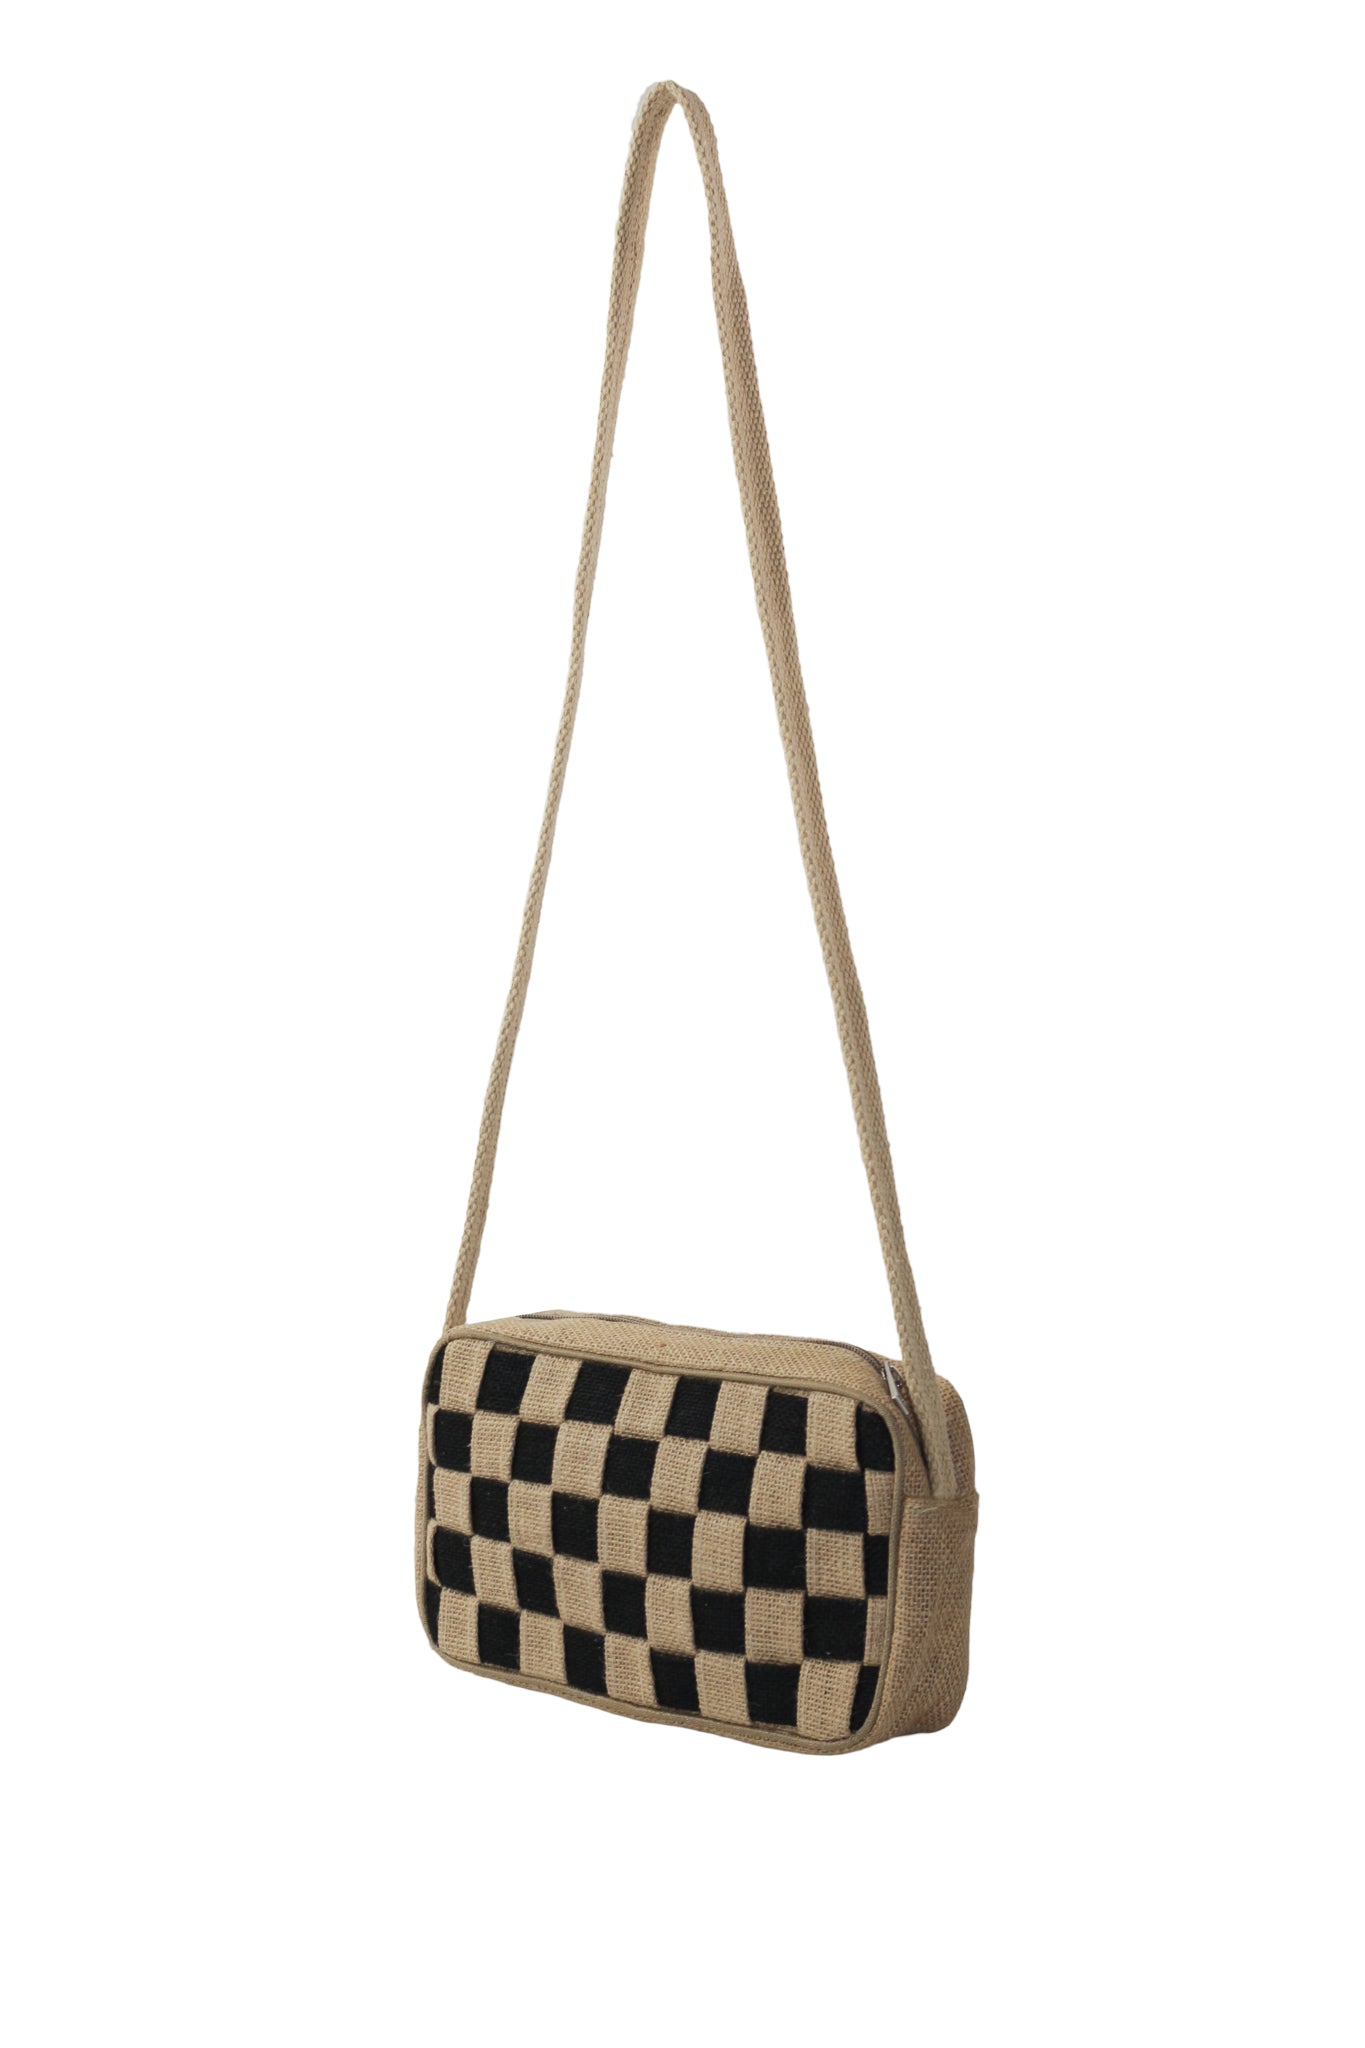 Isabelle LaRue Classic Checkerboard Vegan Jute Crossbody Handbag in Black